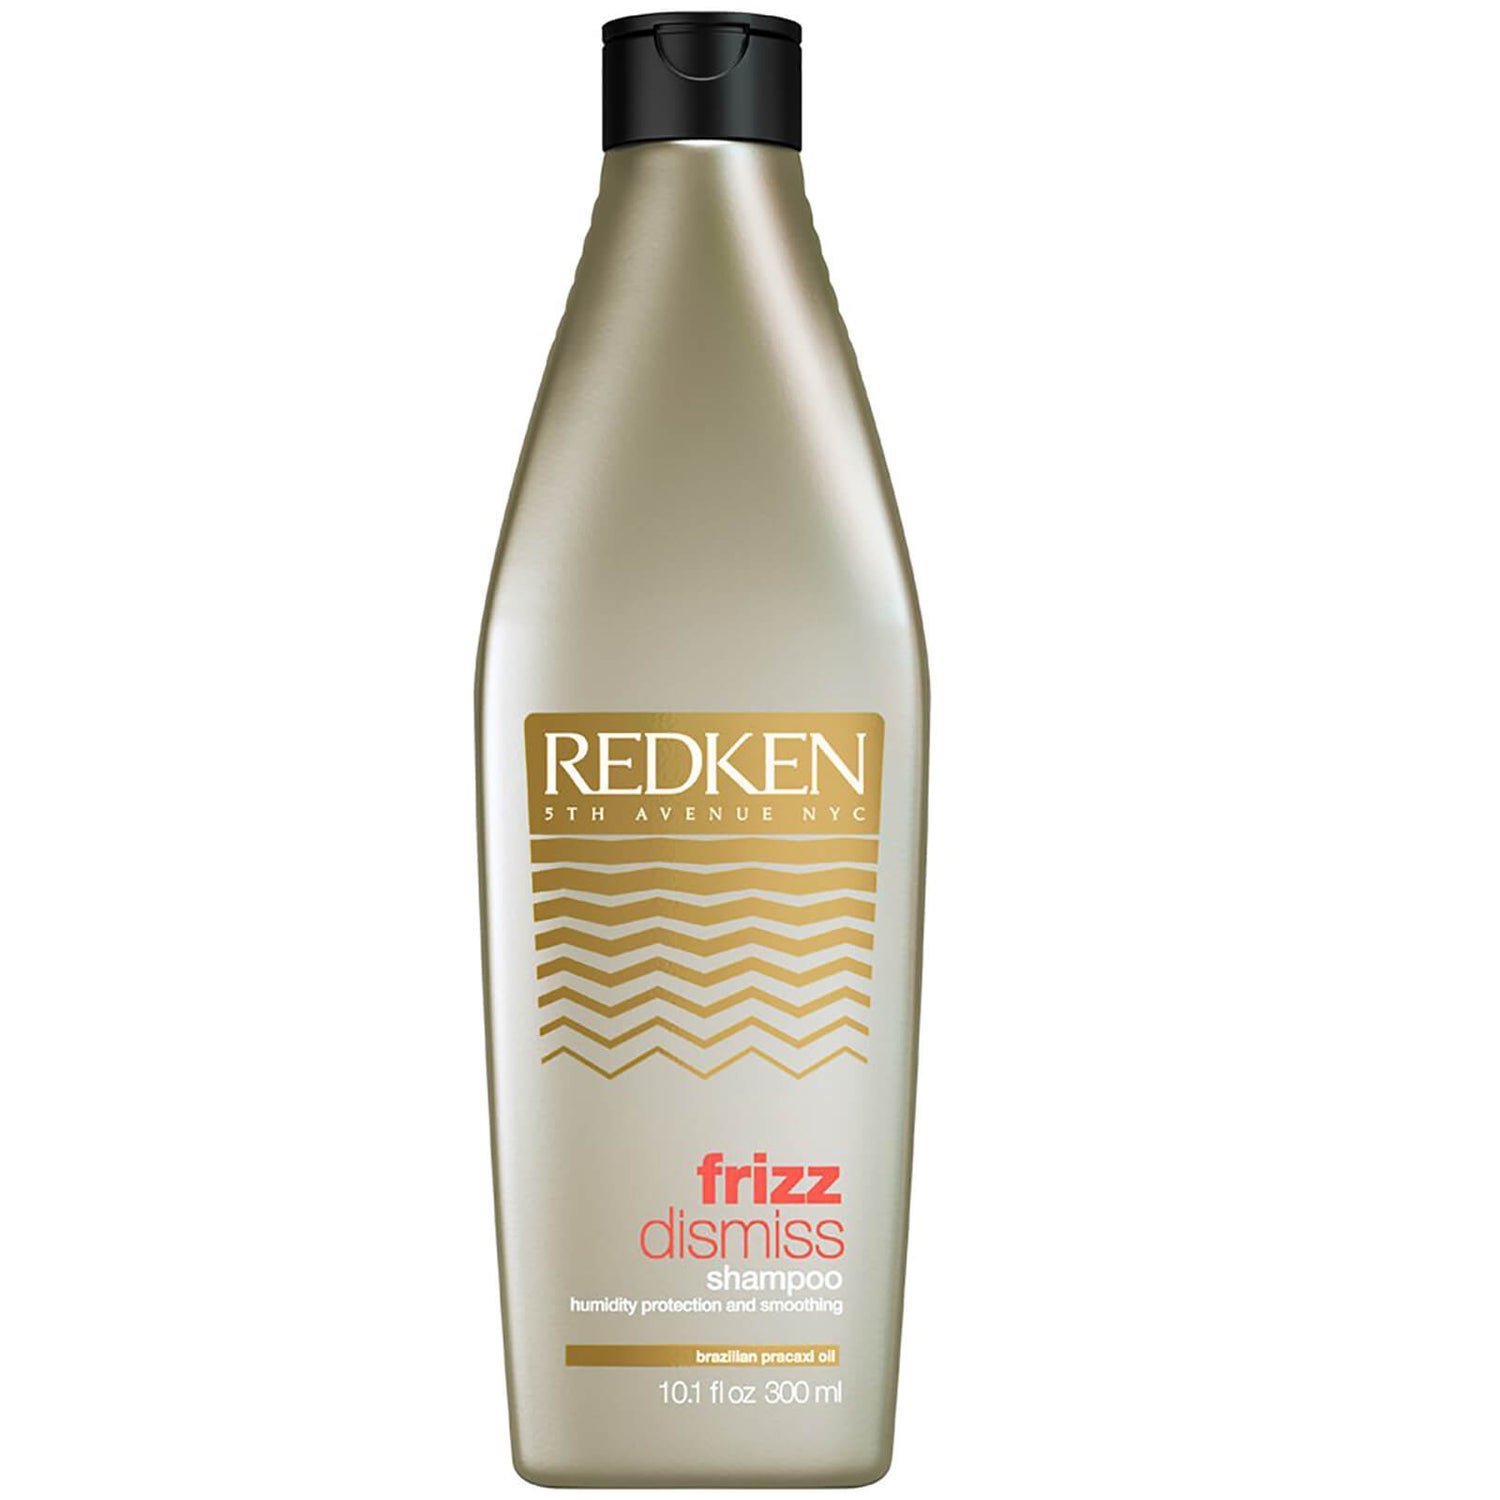 Redken Frizz Dismiss shampooing anti-frisottis (300ml)